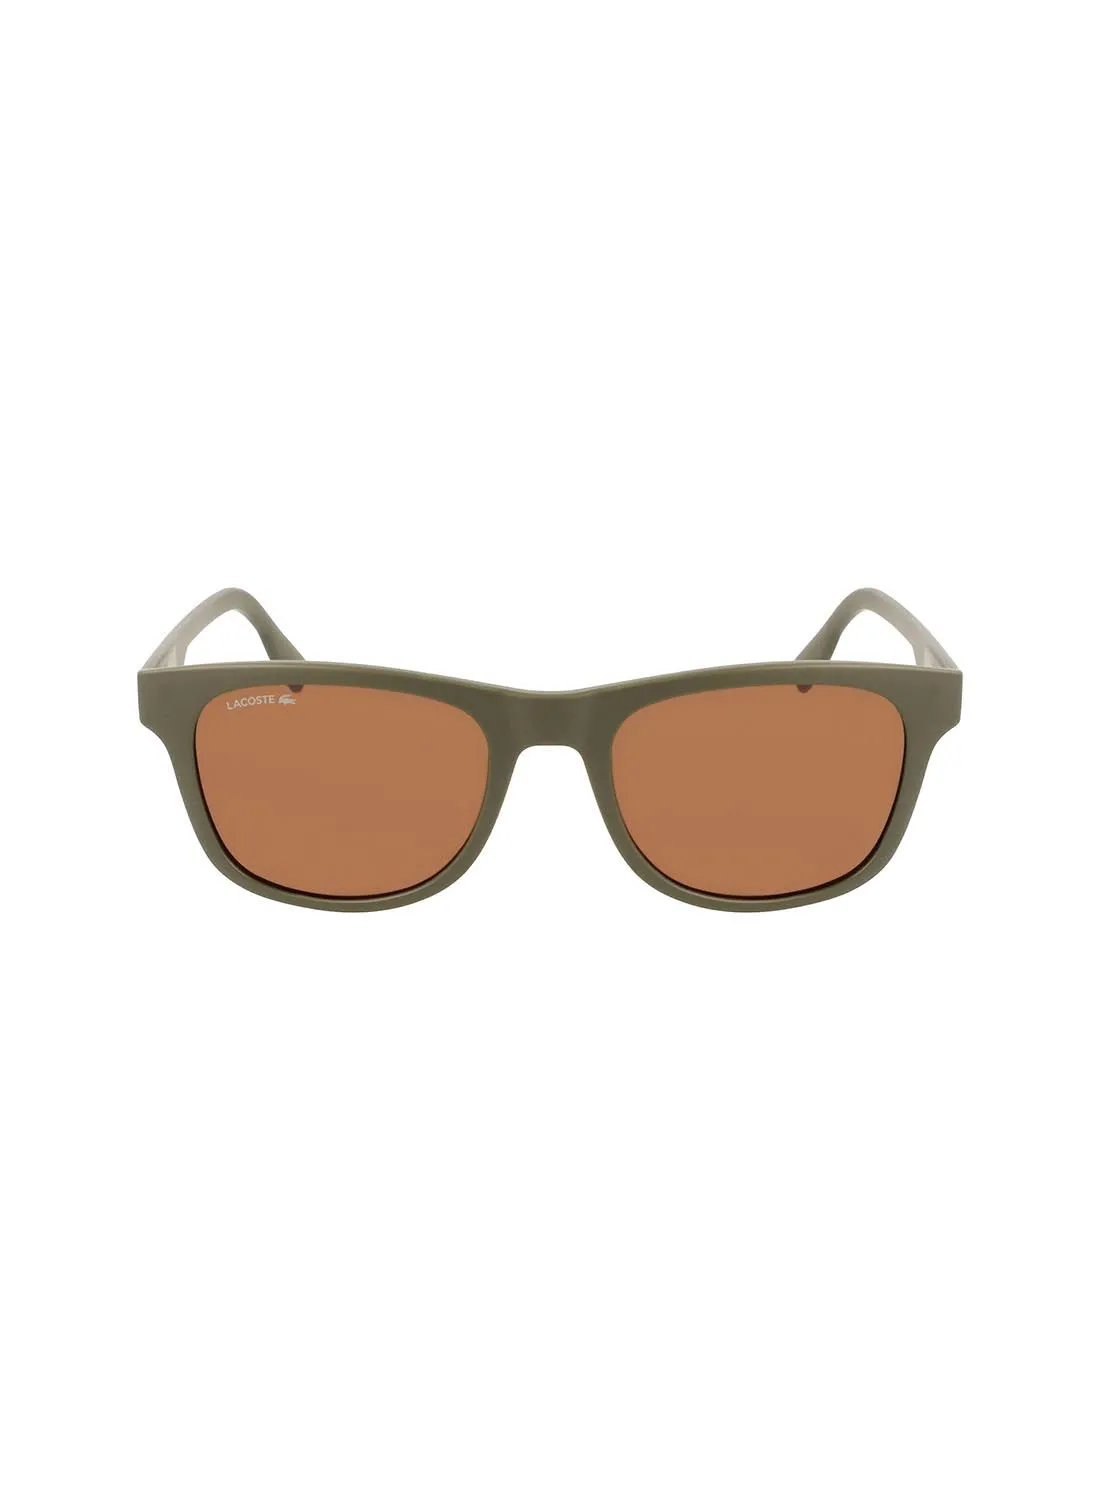 LACOSTE UV Rays Protection Eyewear Sunglasses L969S-317-5420